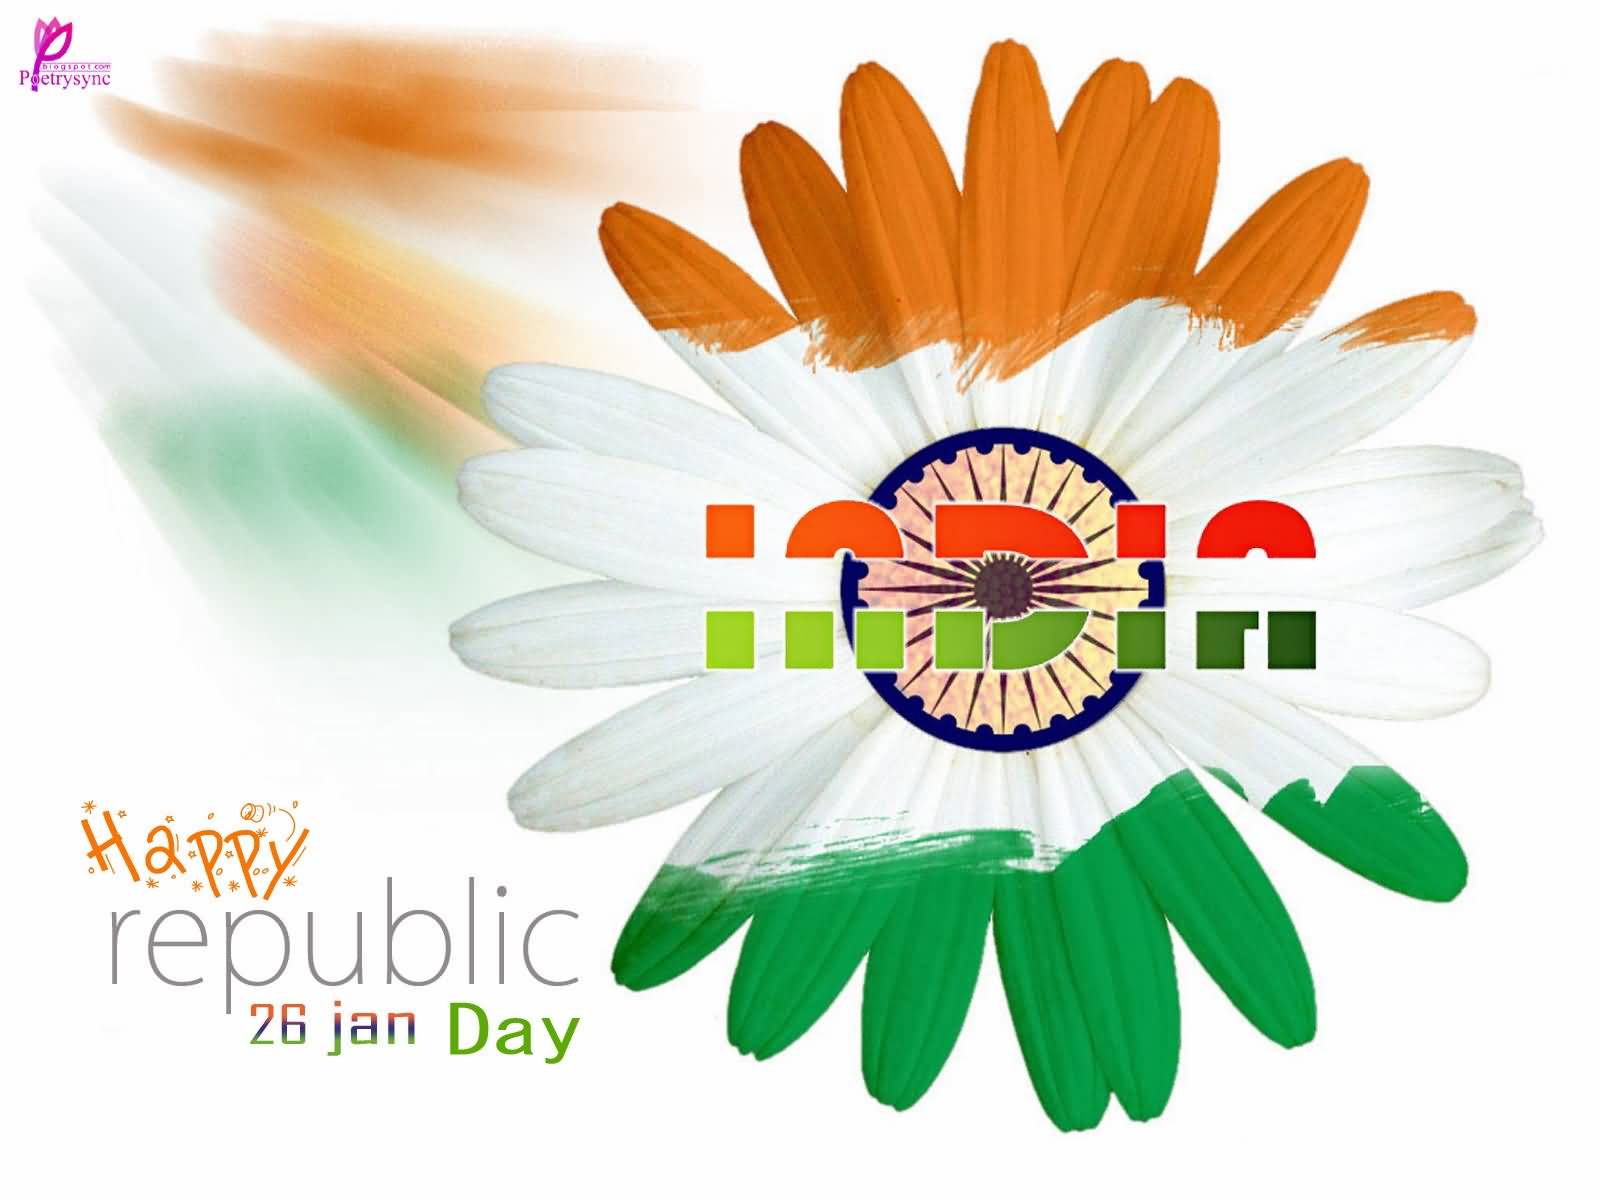 Happy Republic Day 26 Jan Tri Color Flower Picture